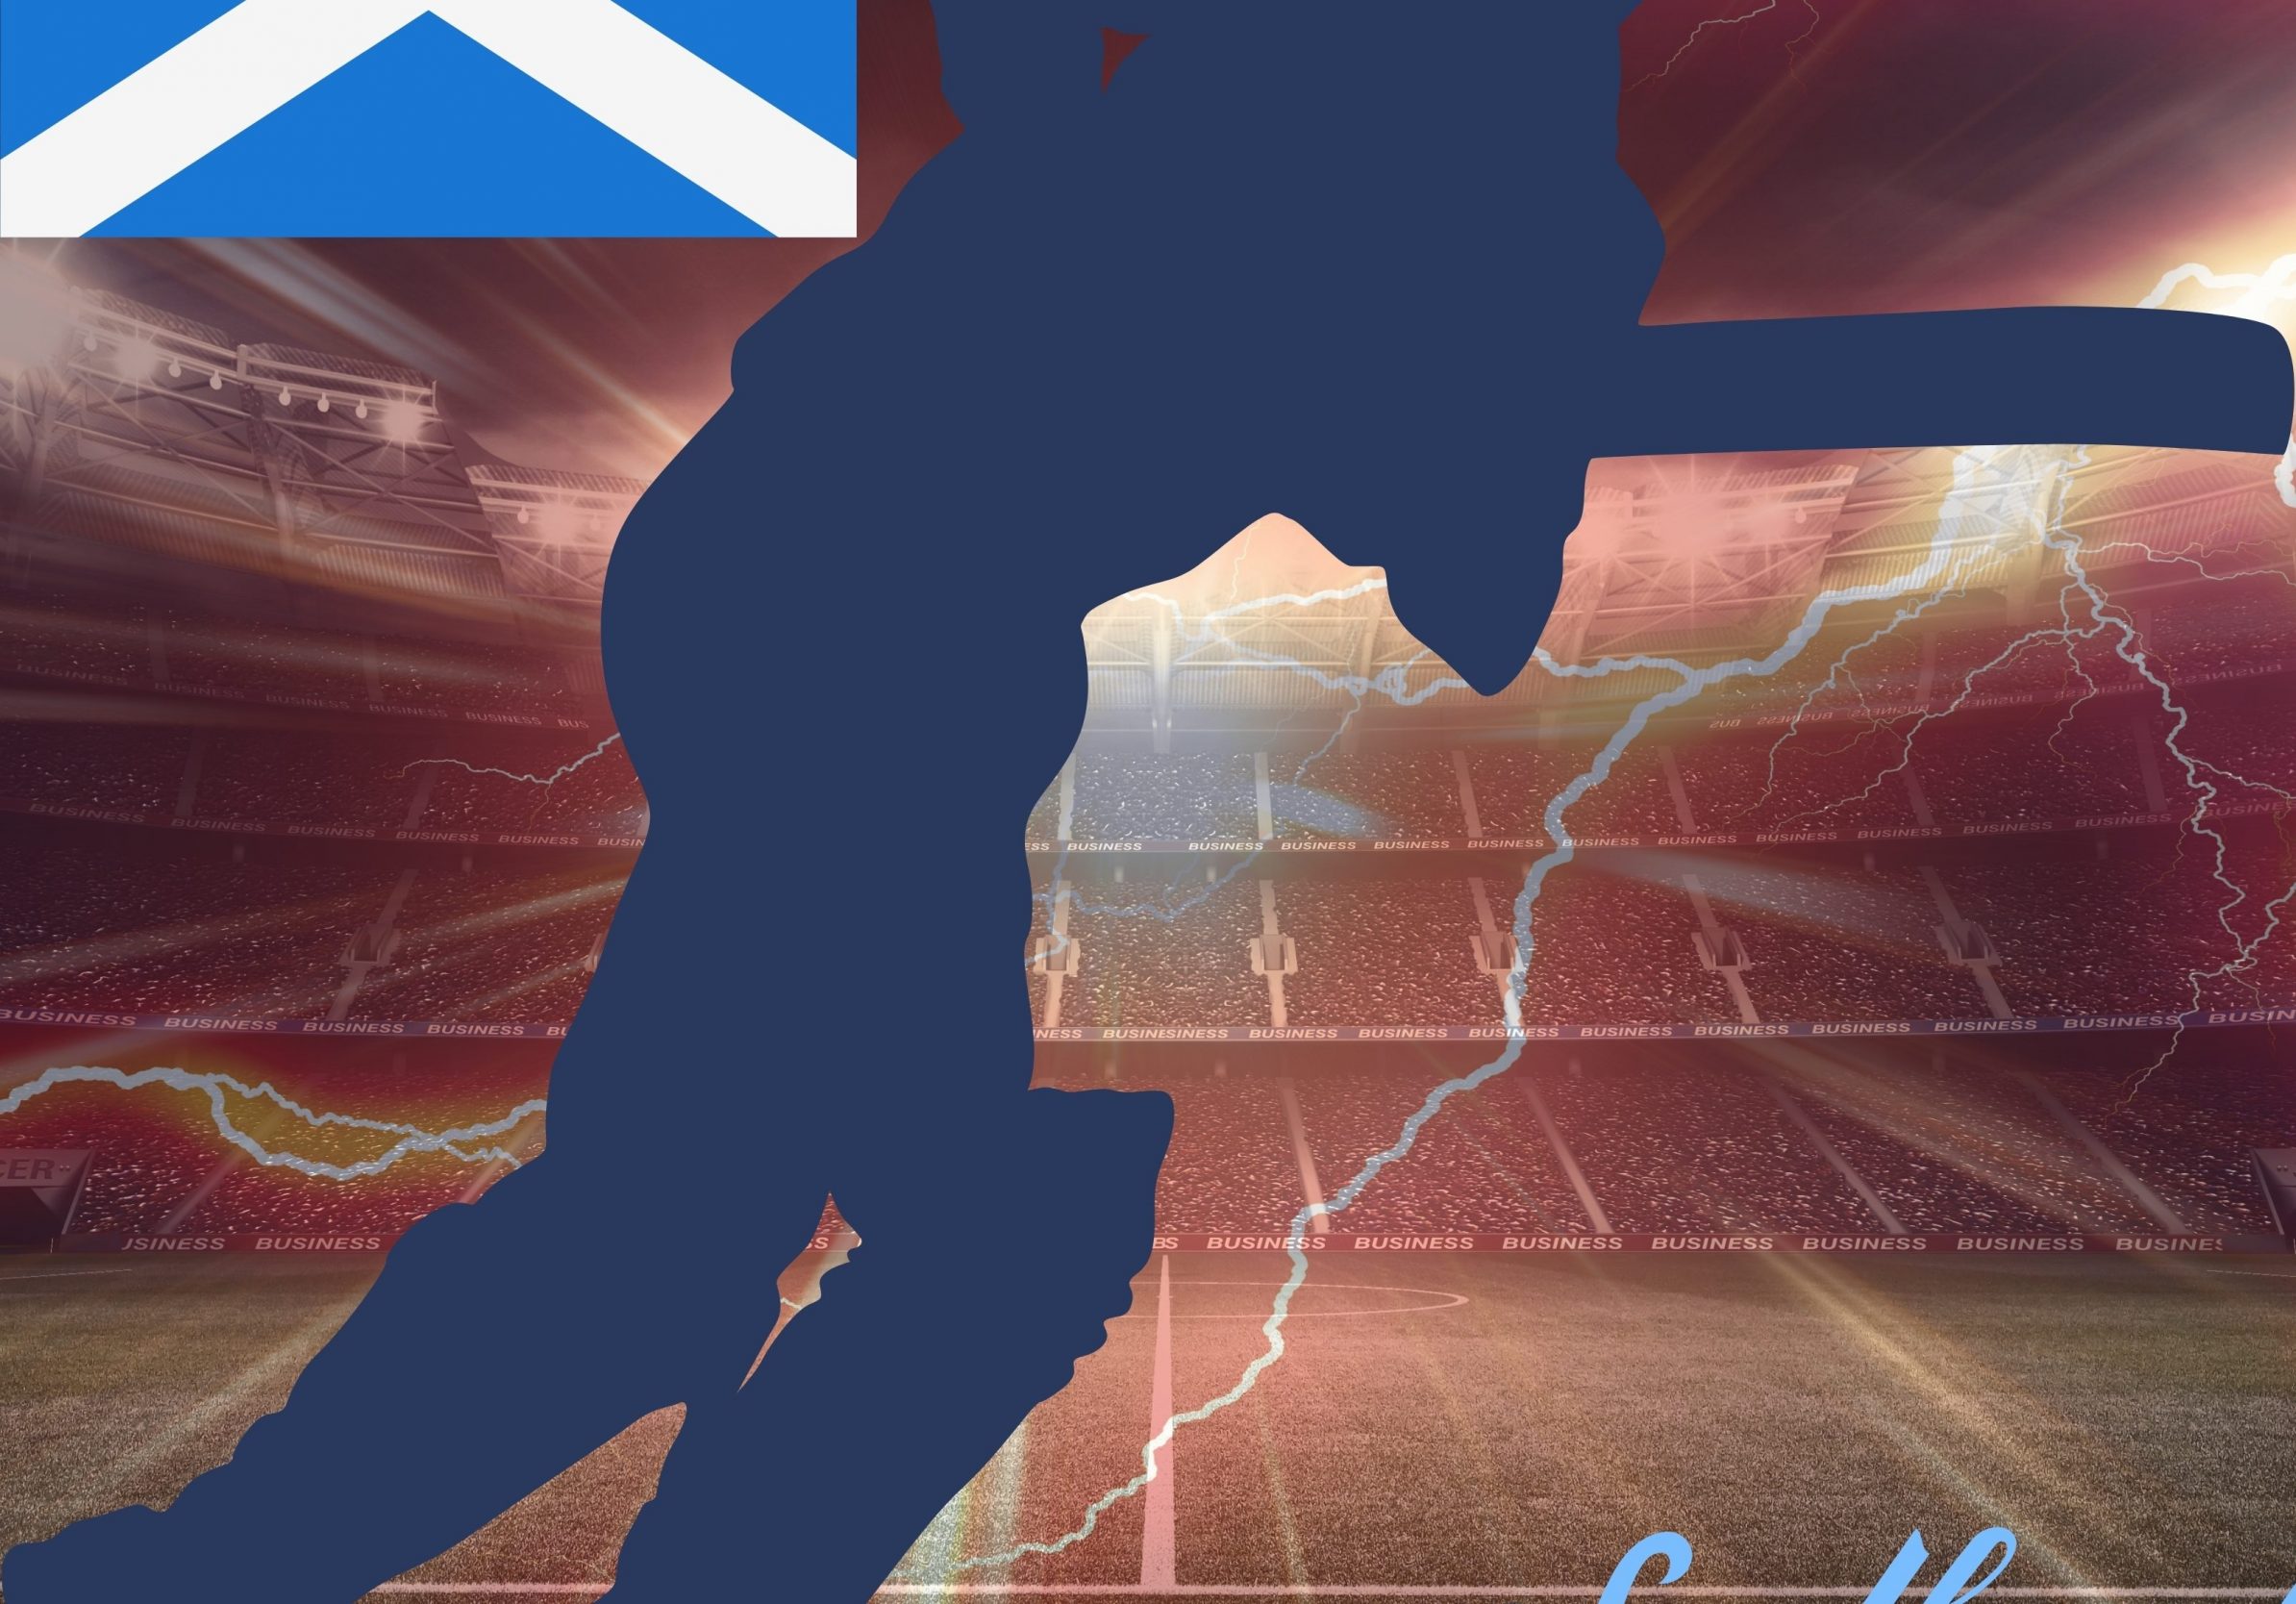 2388x1668 iPad Pro wallpapers Scotland Cricket Stadium iPad Wallpaper 2388x1668 pixels resolution